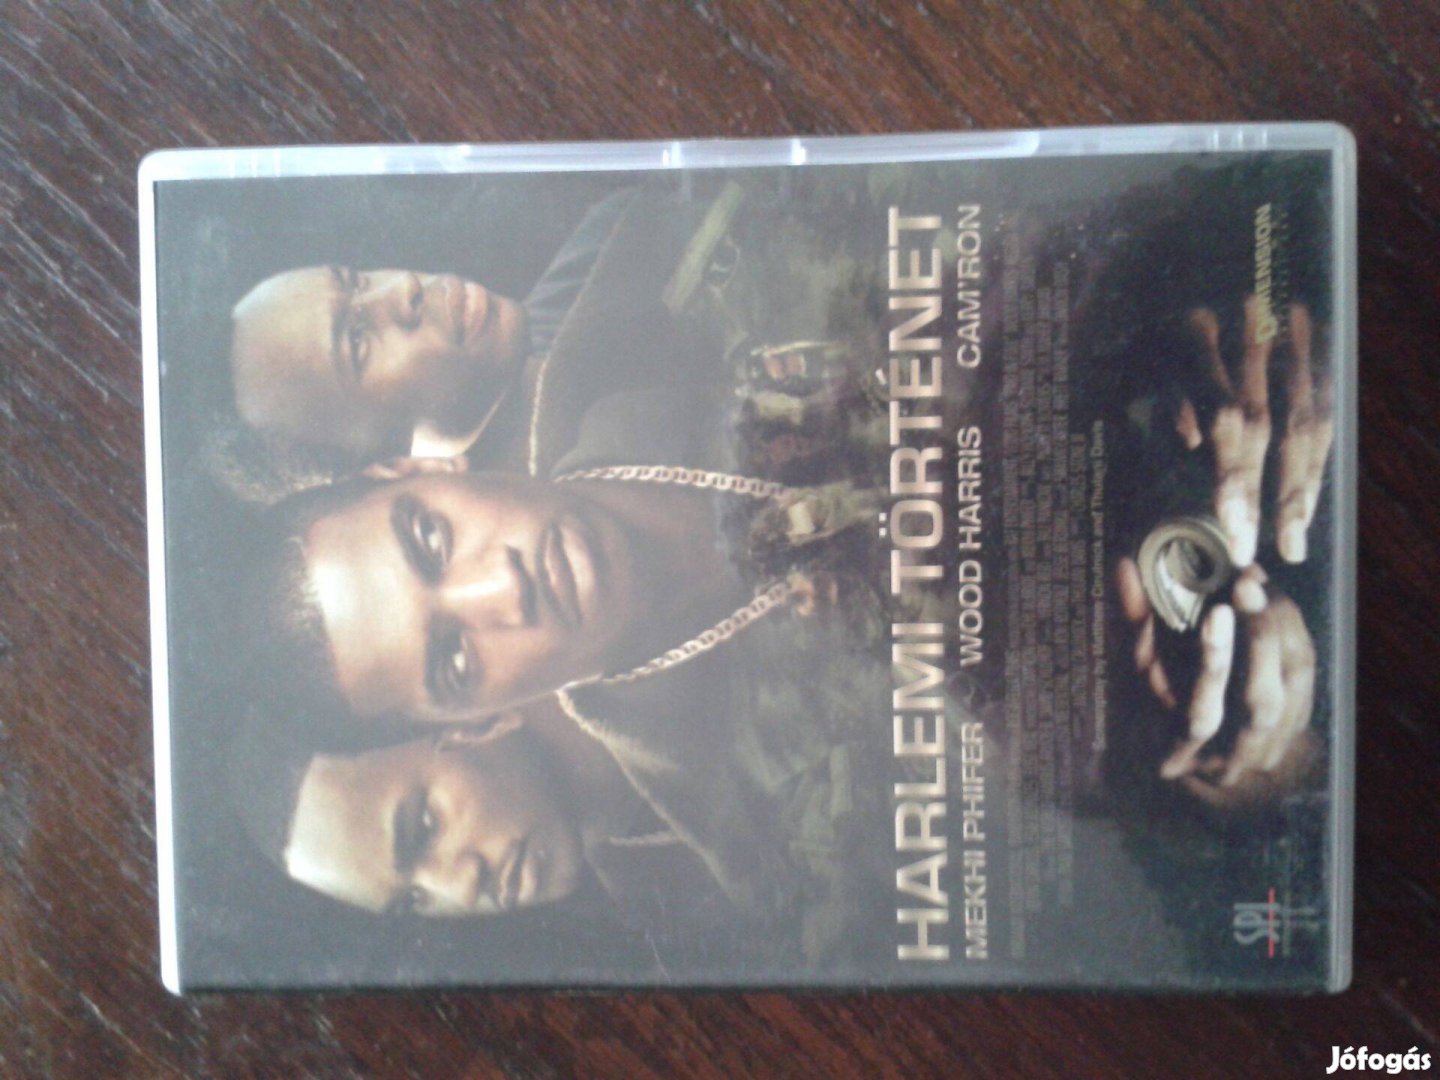 Harlemi történet DVD